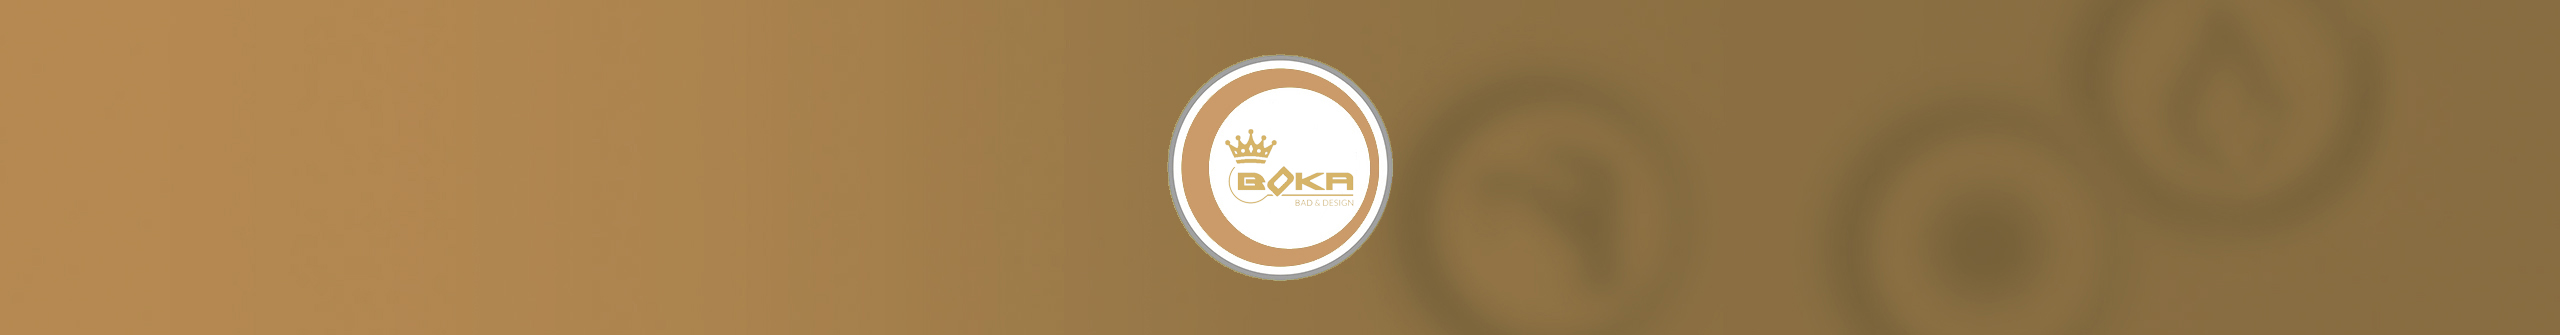 banner-boka-exklusiv-2